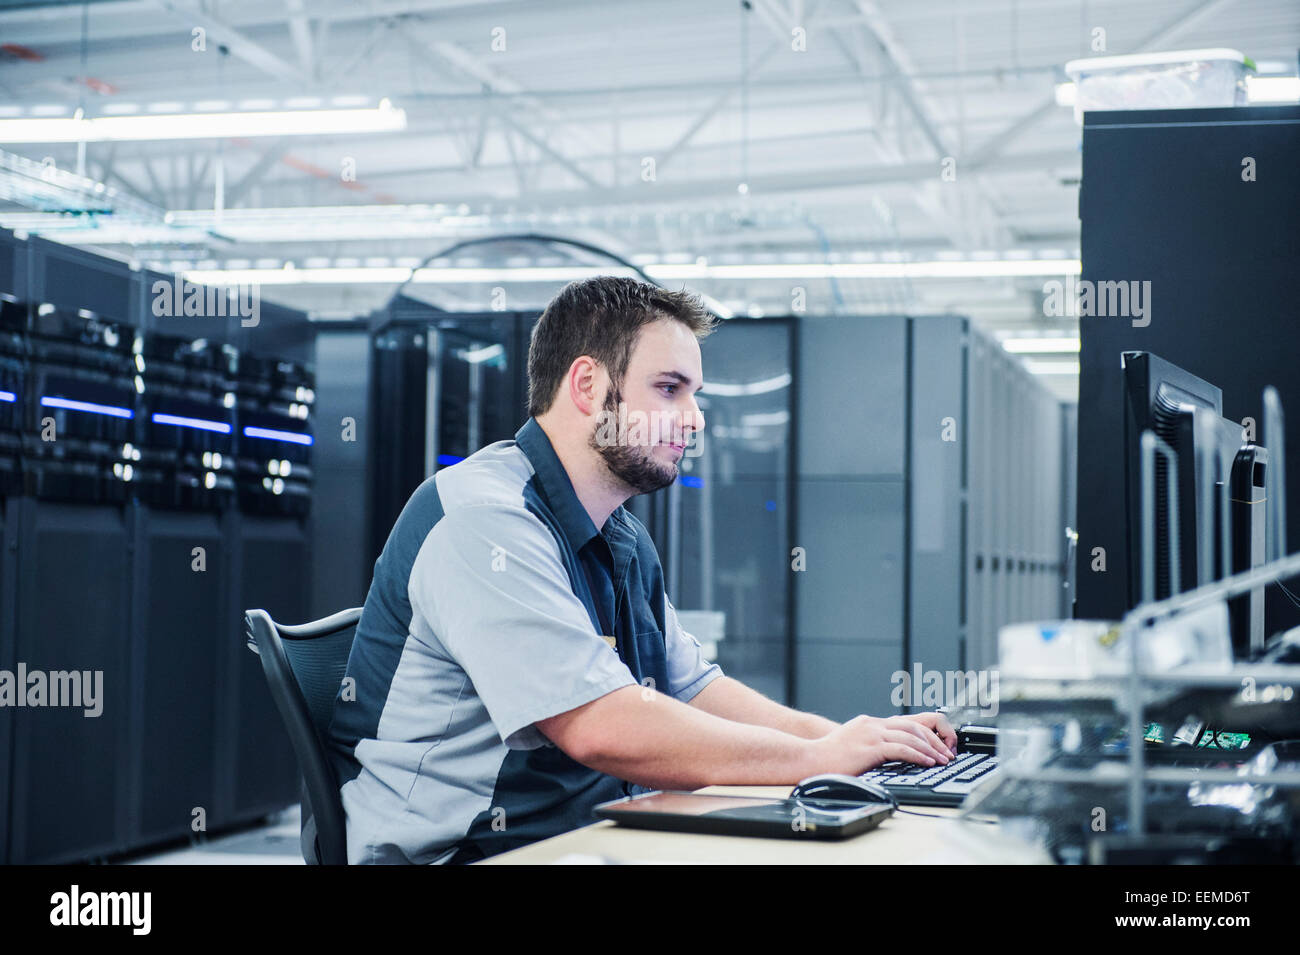 Caucasian technician using computer in server room Stock Photo